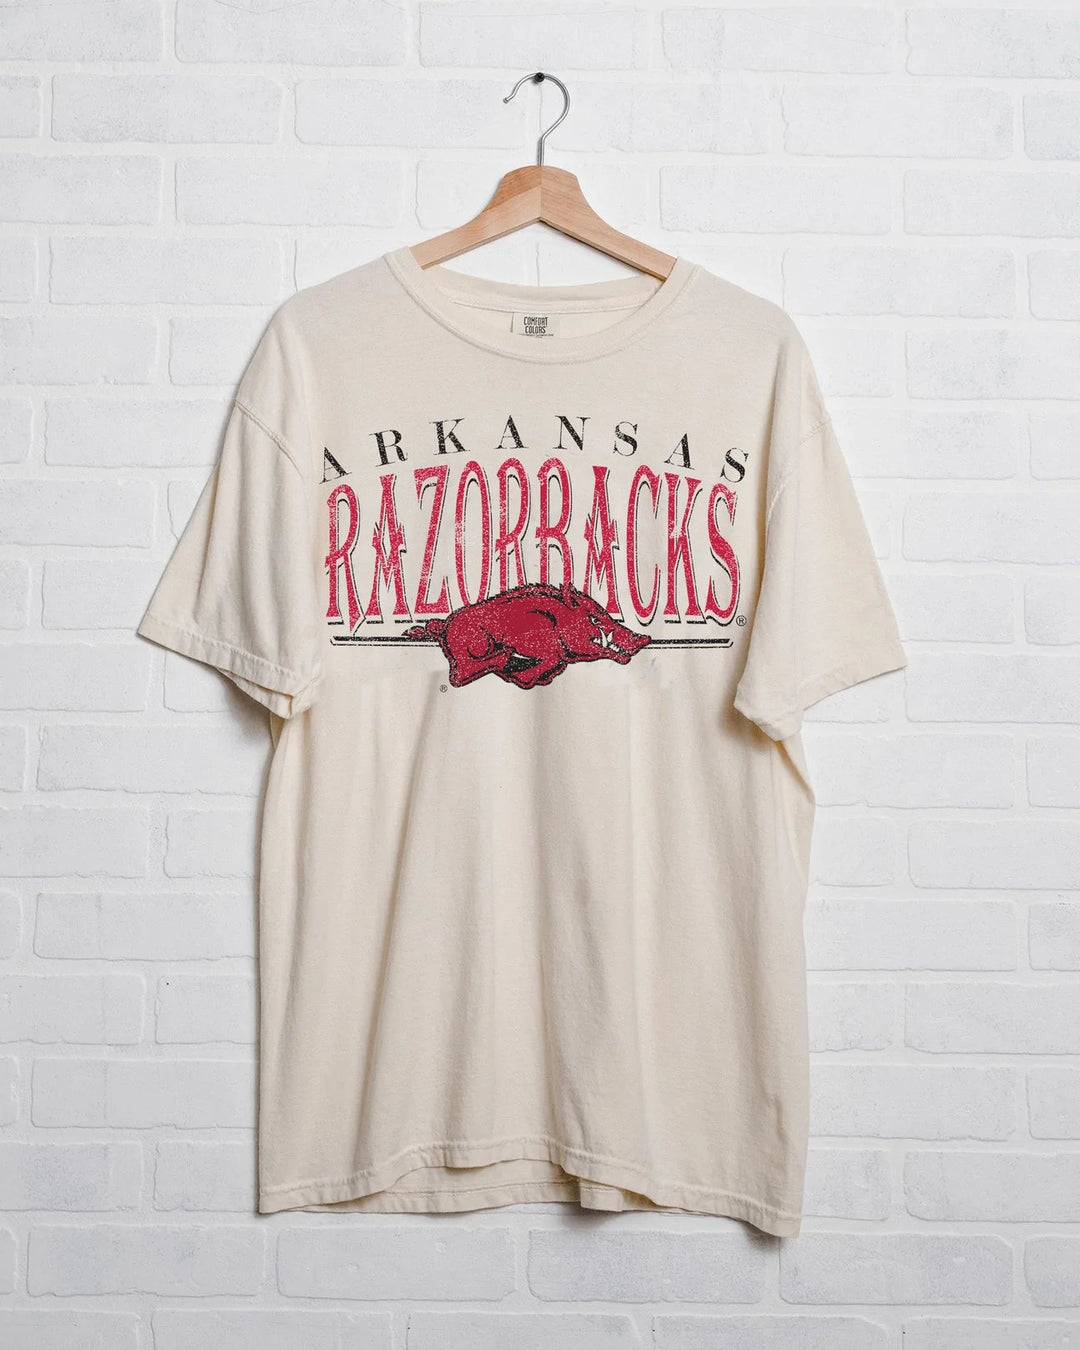 Arkansas Razorbacks 80s Comfort Colors Tee - Shirts & Tops